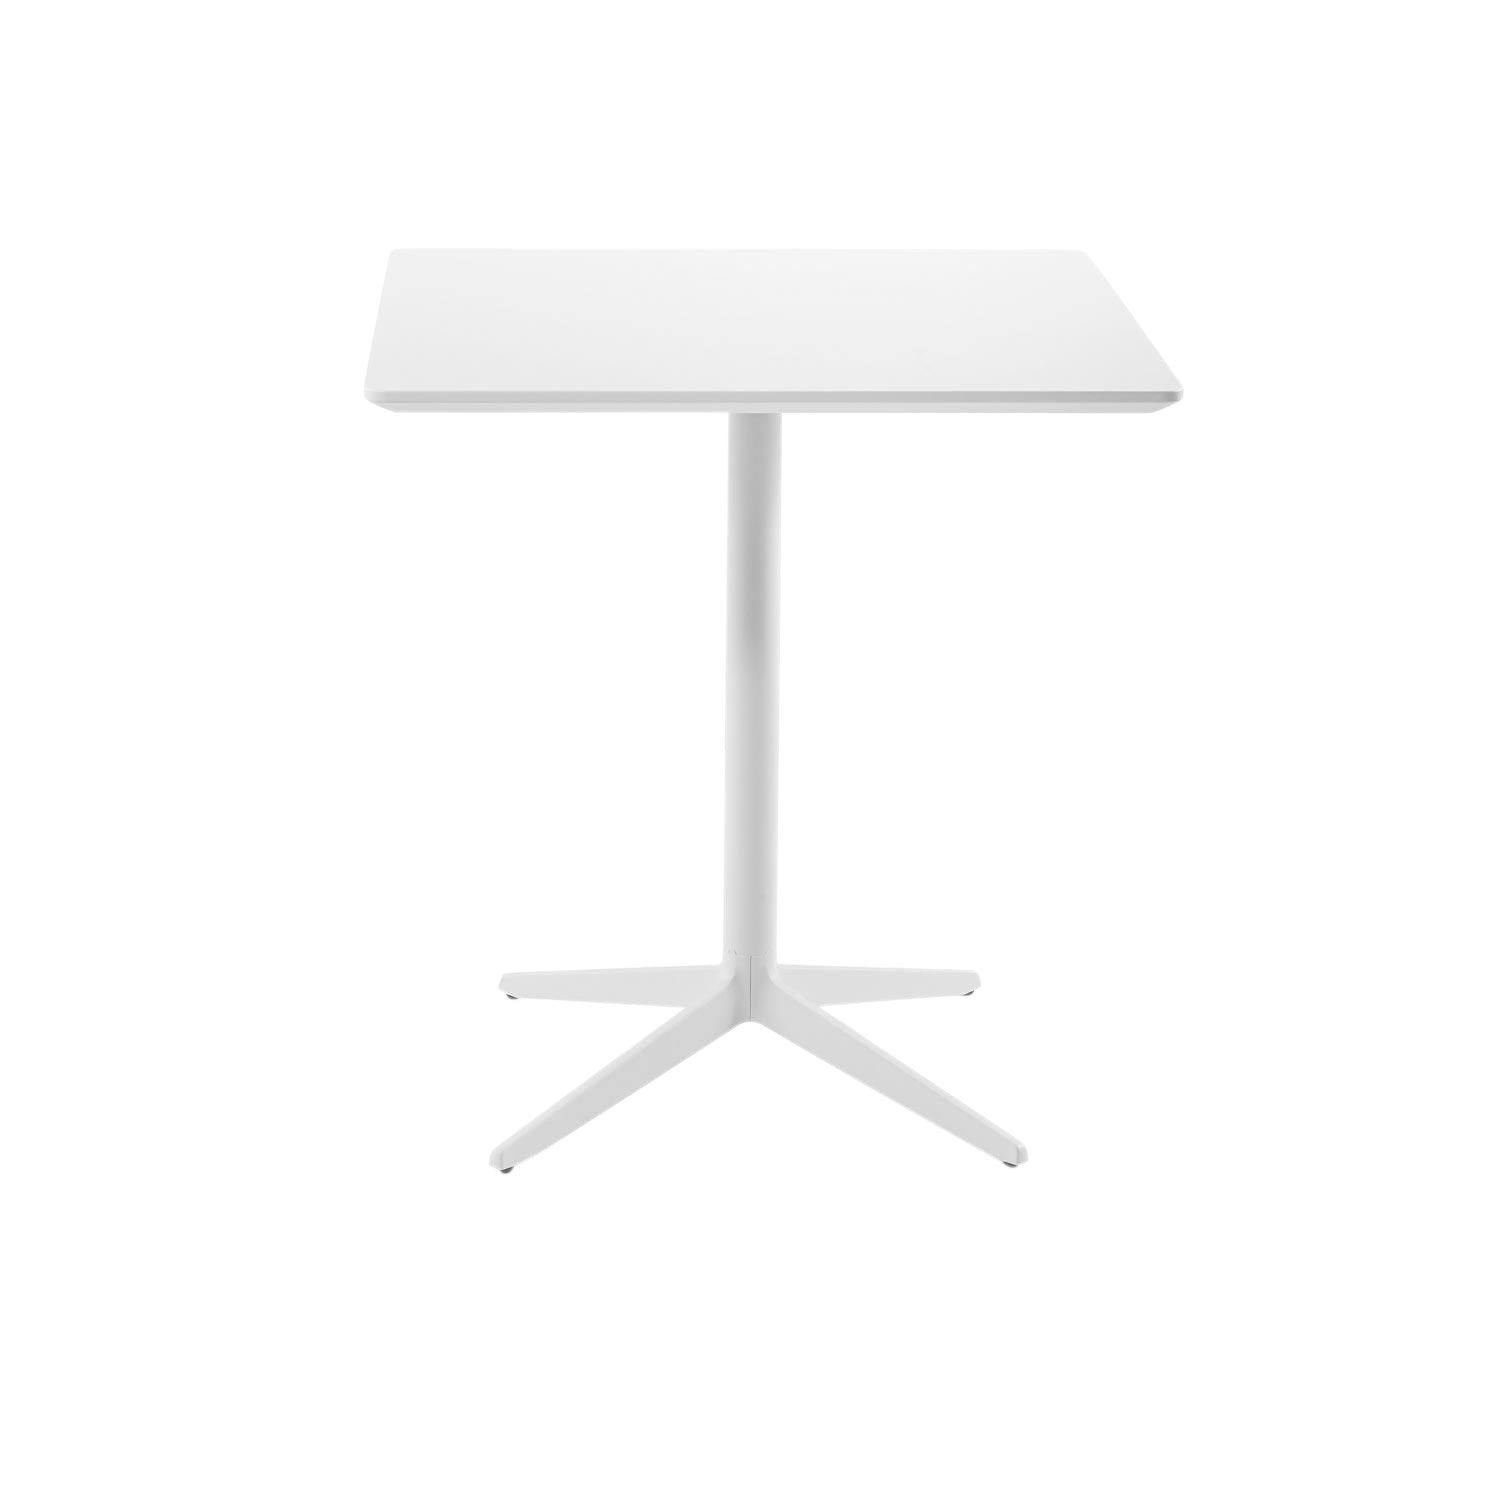 Plank - Mister X Dining Table 70x70cm - wei/MDF/H: 73-74,5cm/verrstellbare Gleiter